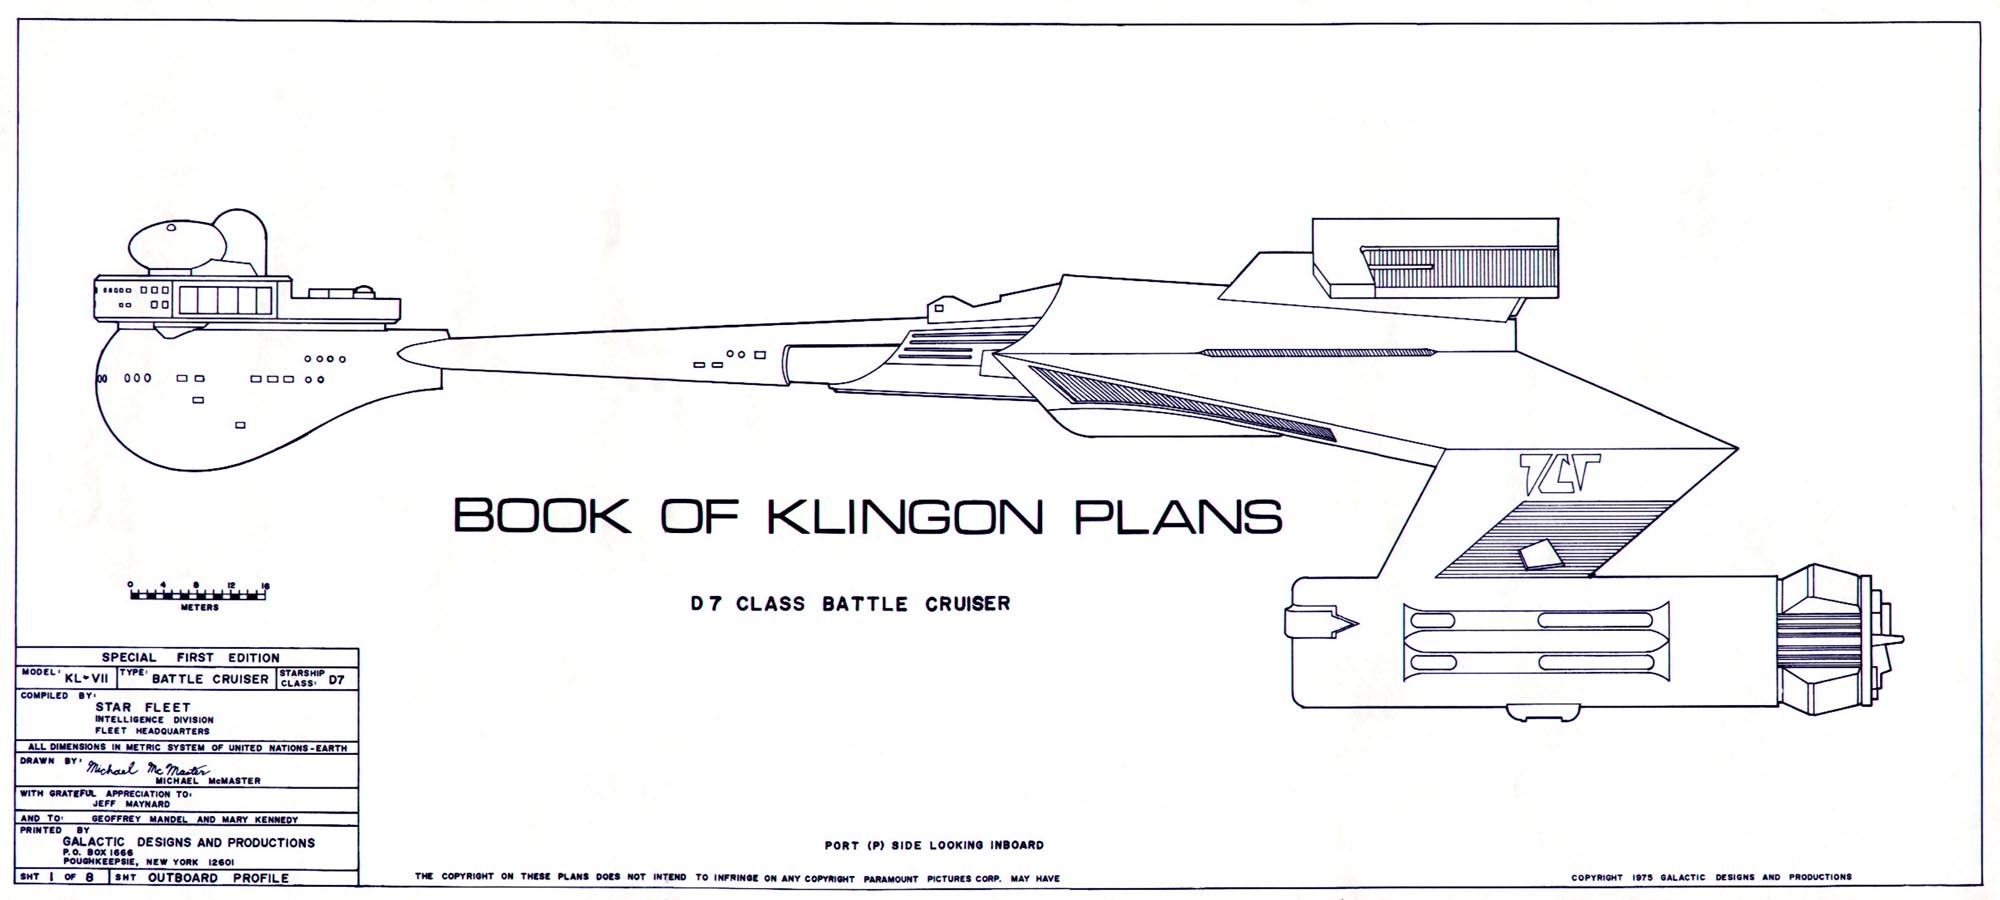 book-of-klingon-plans-sheet-1.jpg